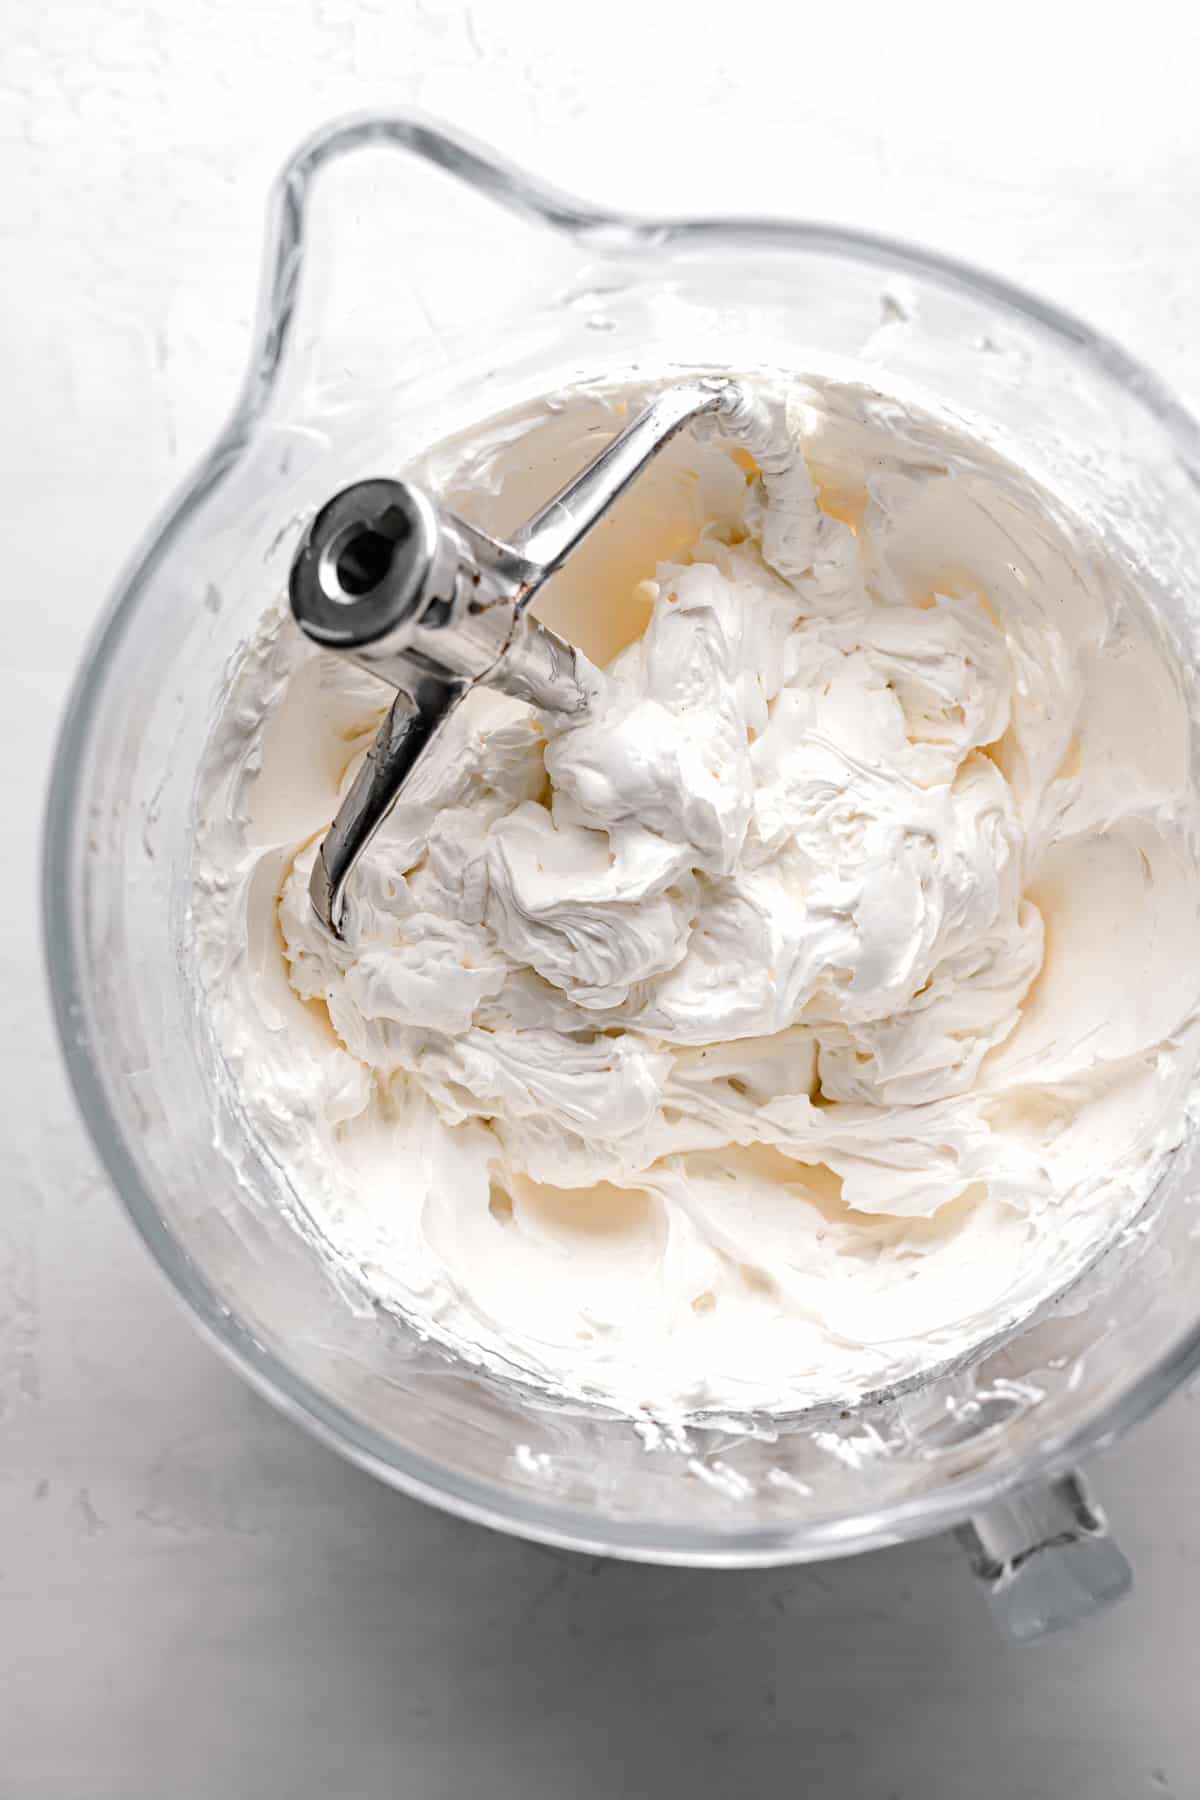 swiss meringue buttercream in glass bowl